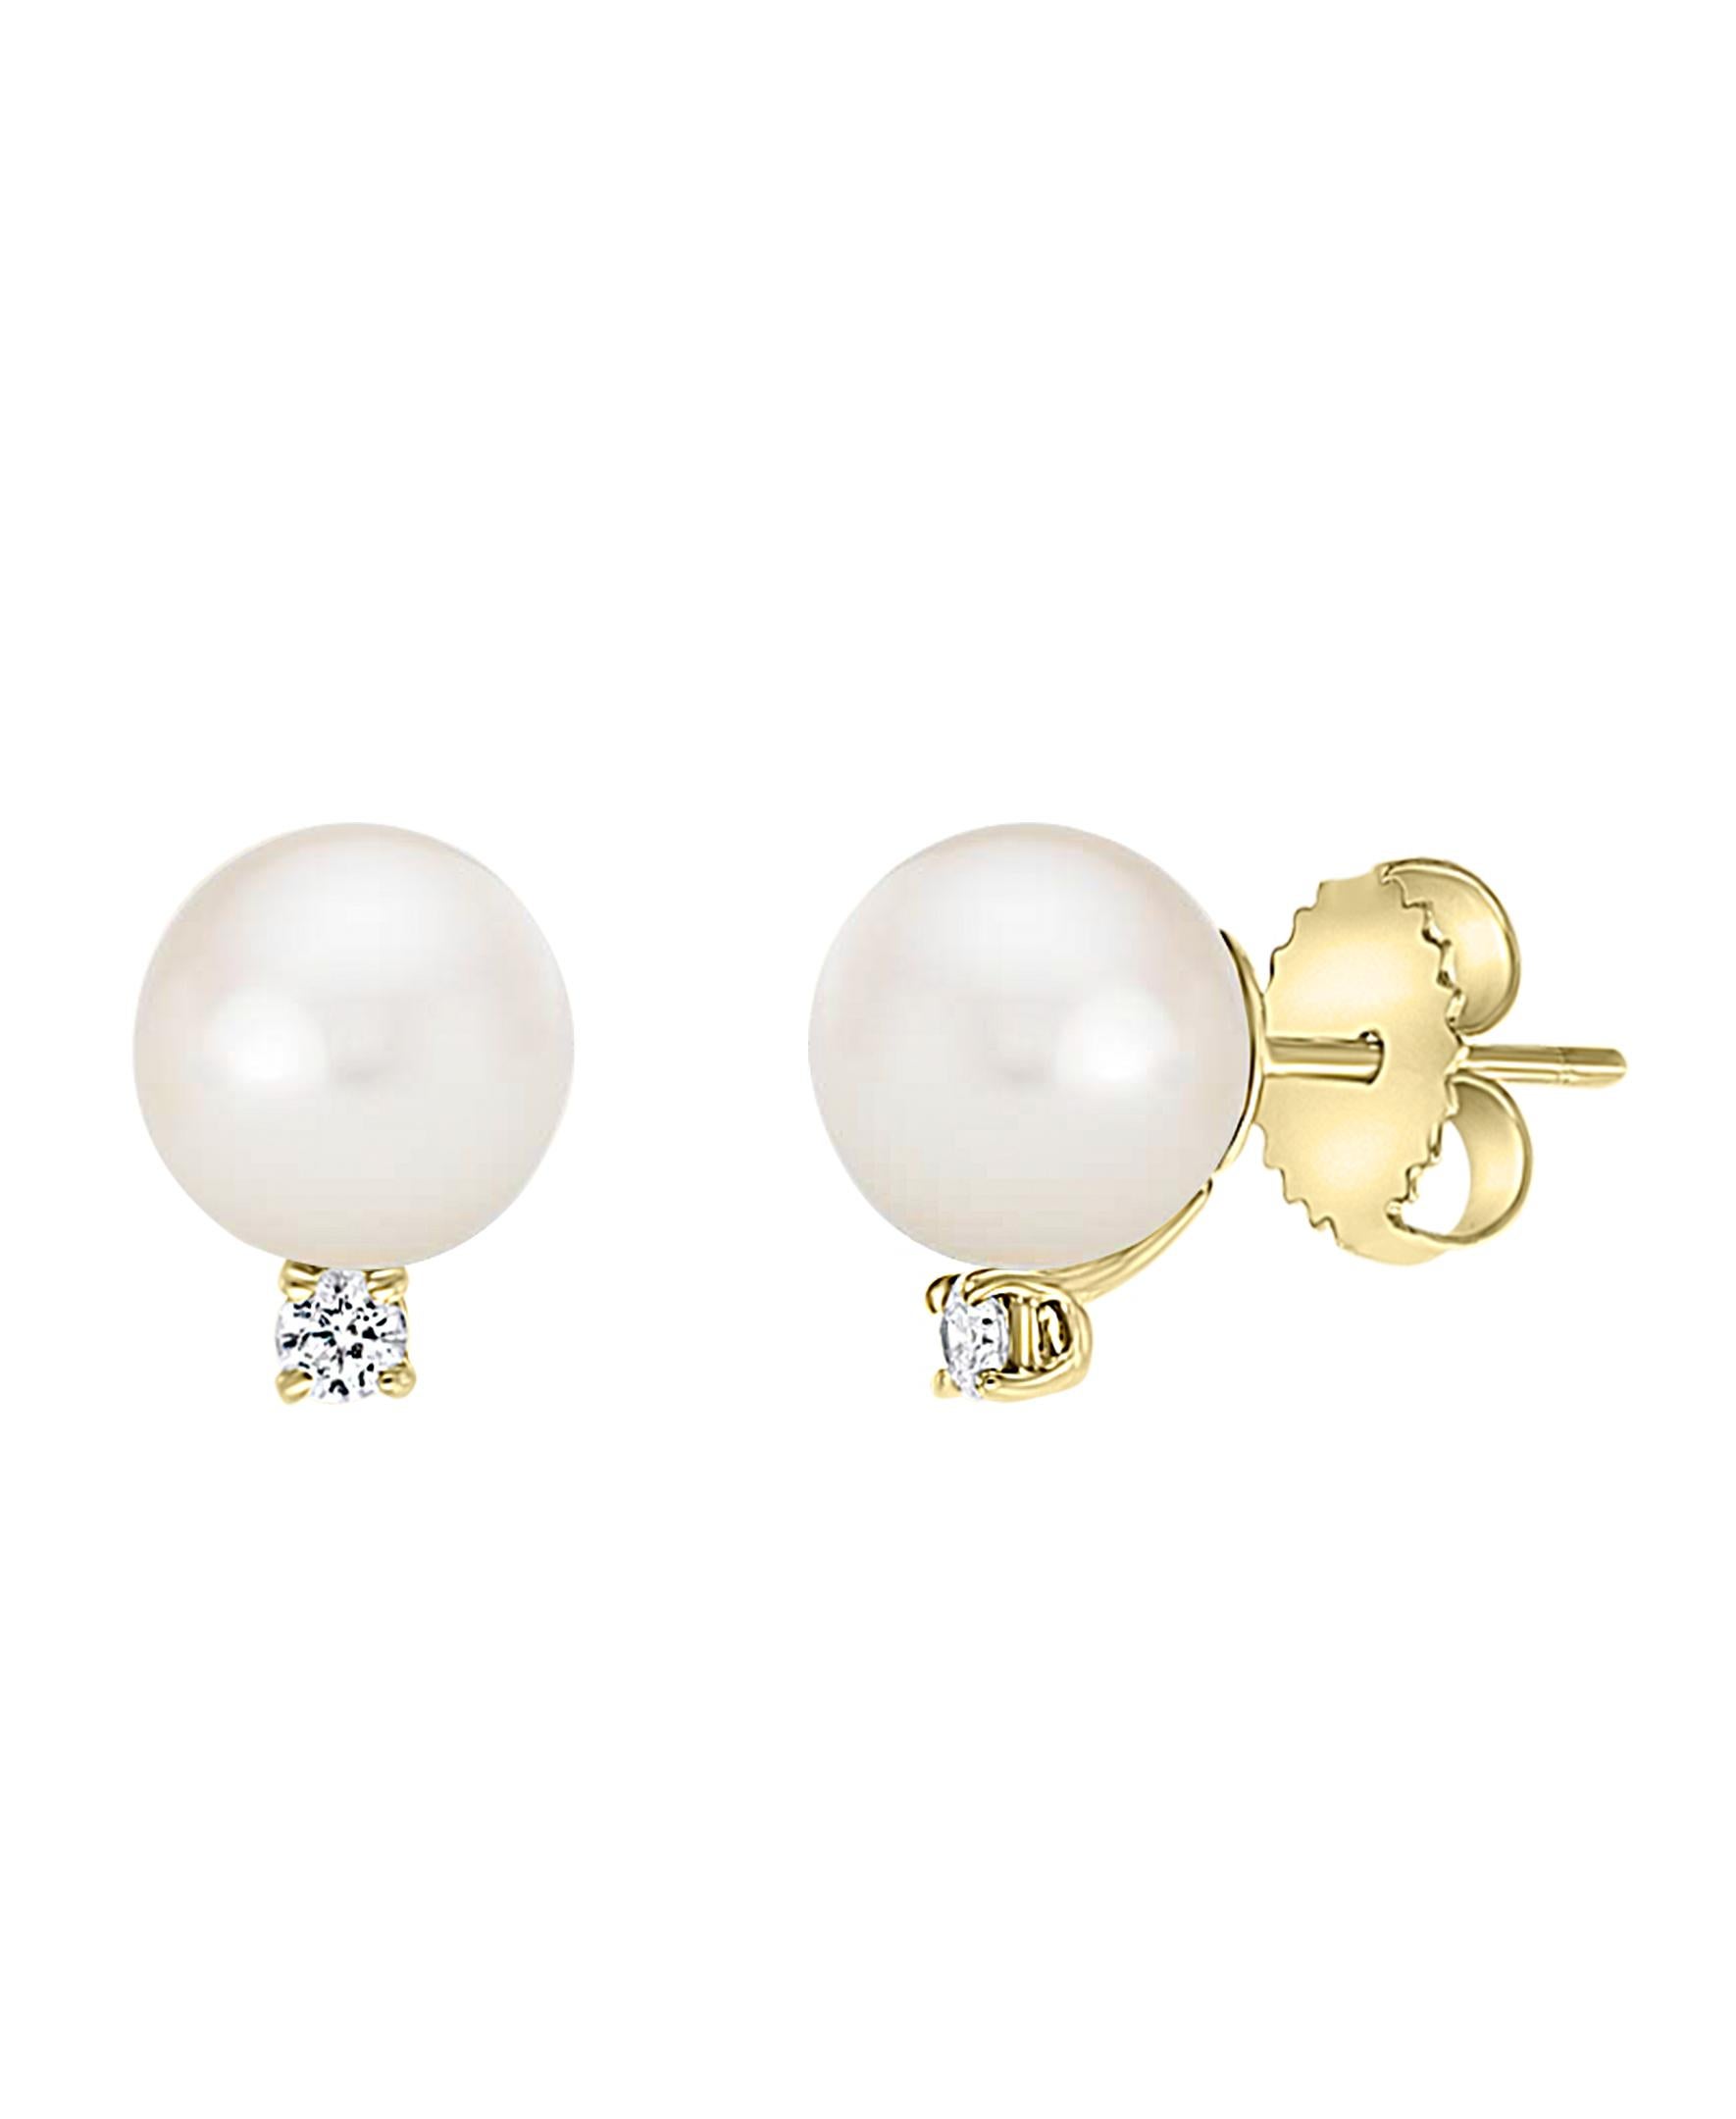 8.5 mm pearl earrings